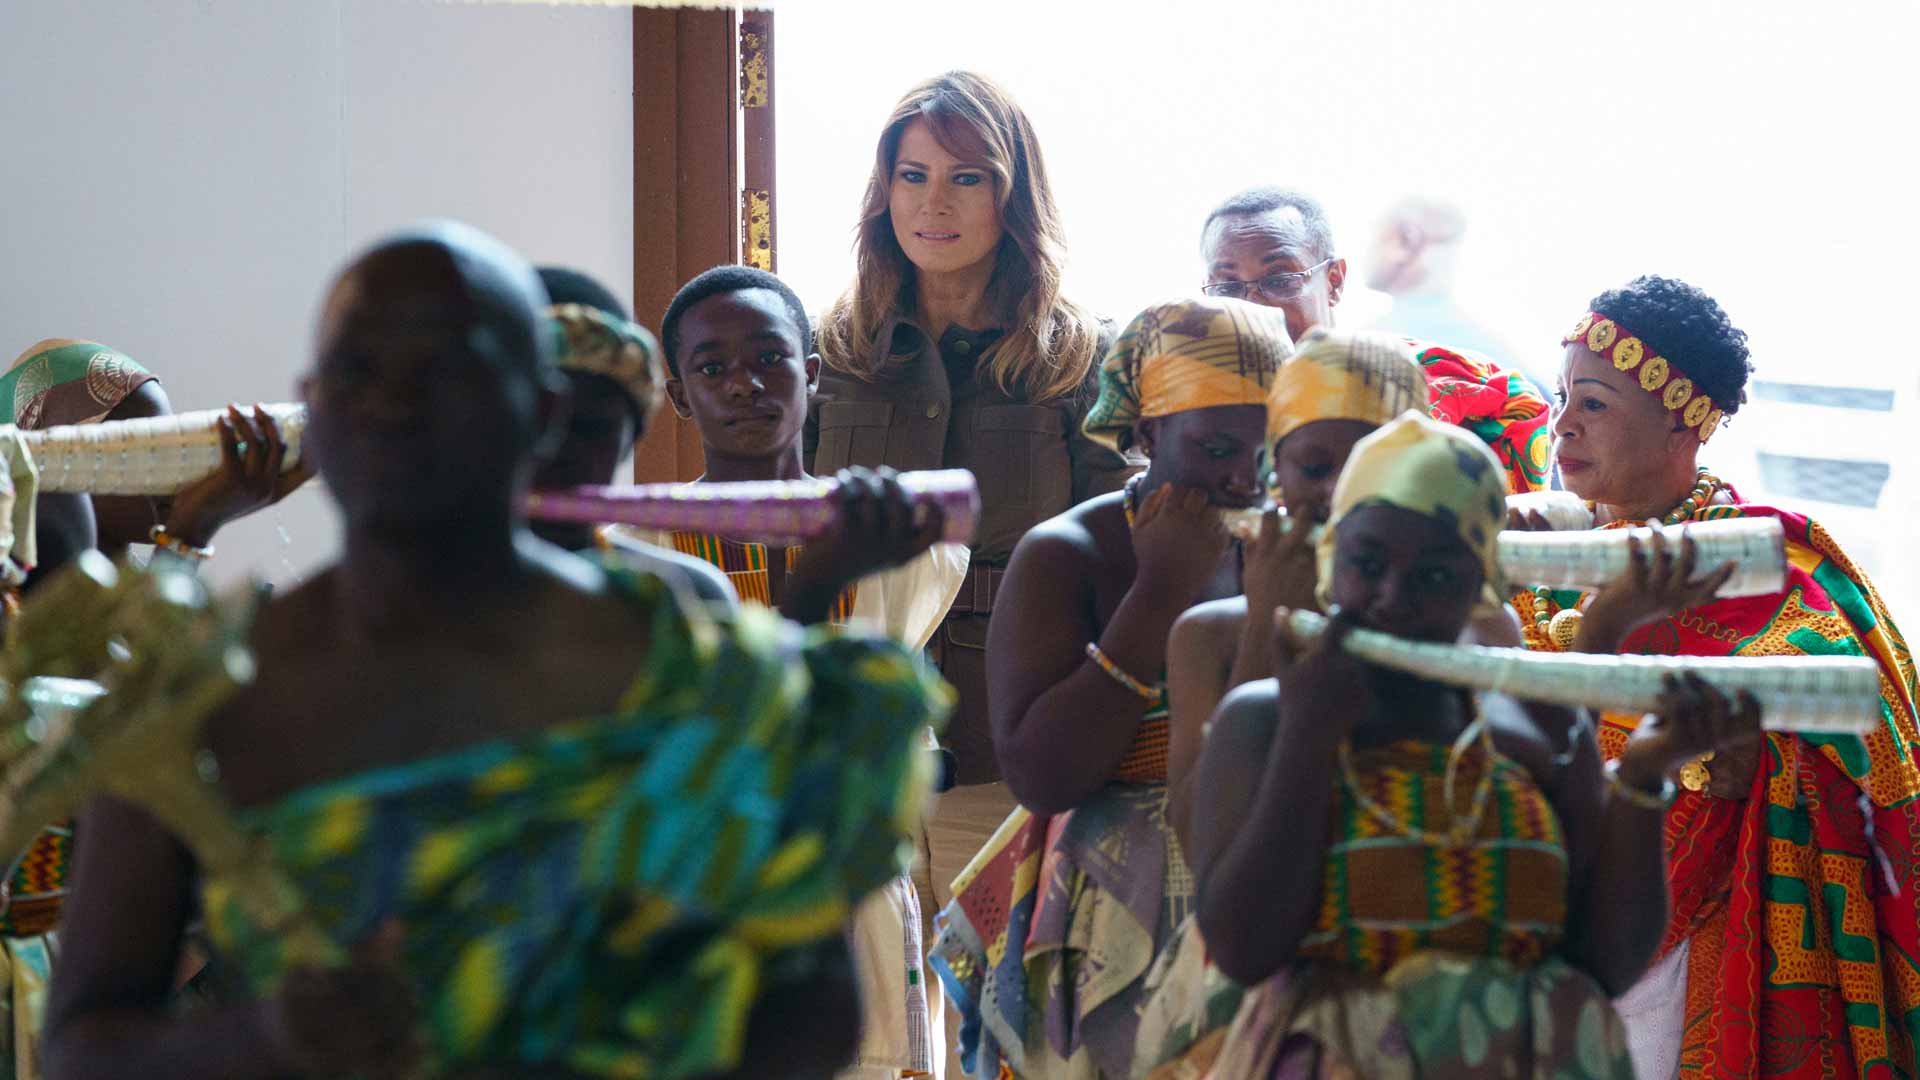 Melania Trump visita una antigua fortaleza esclavista en Ghana